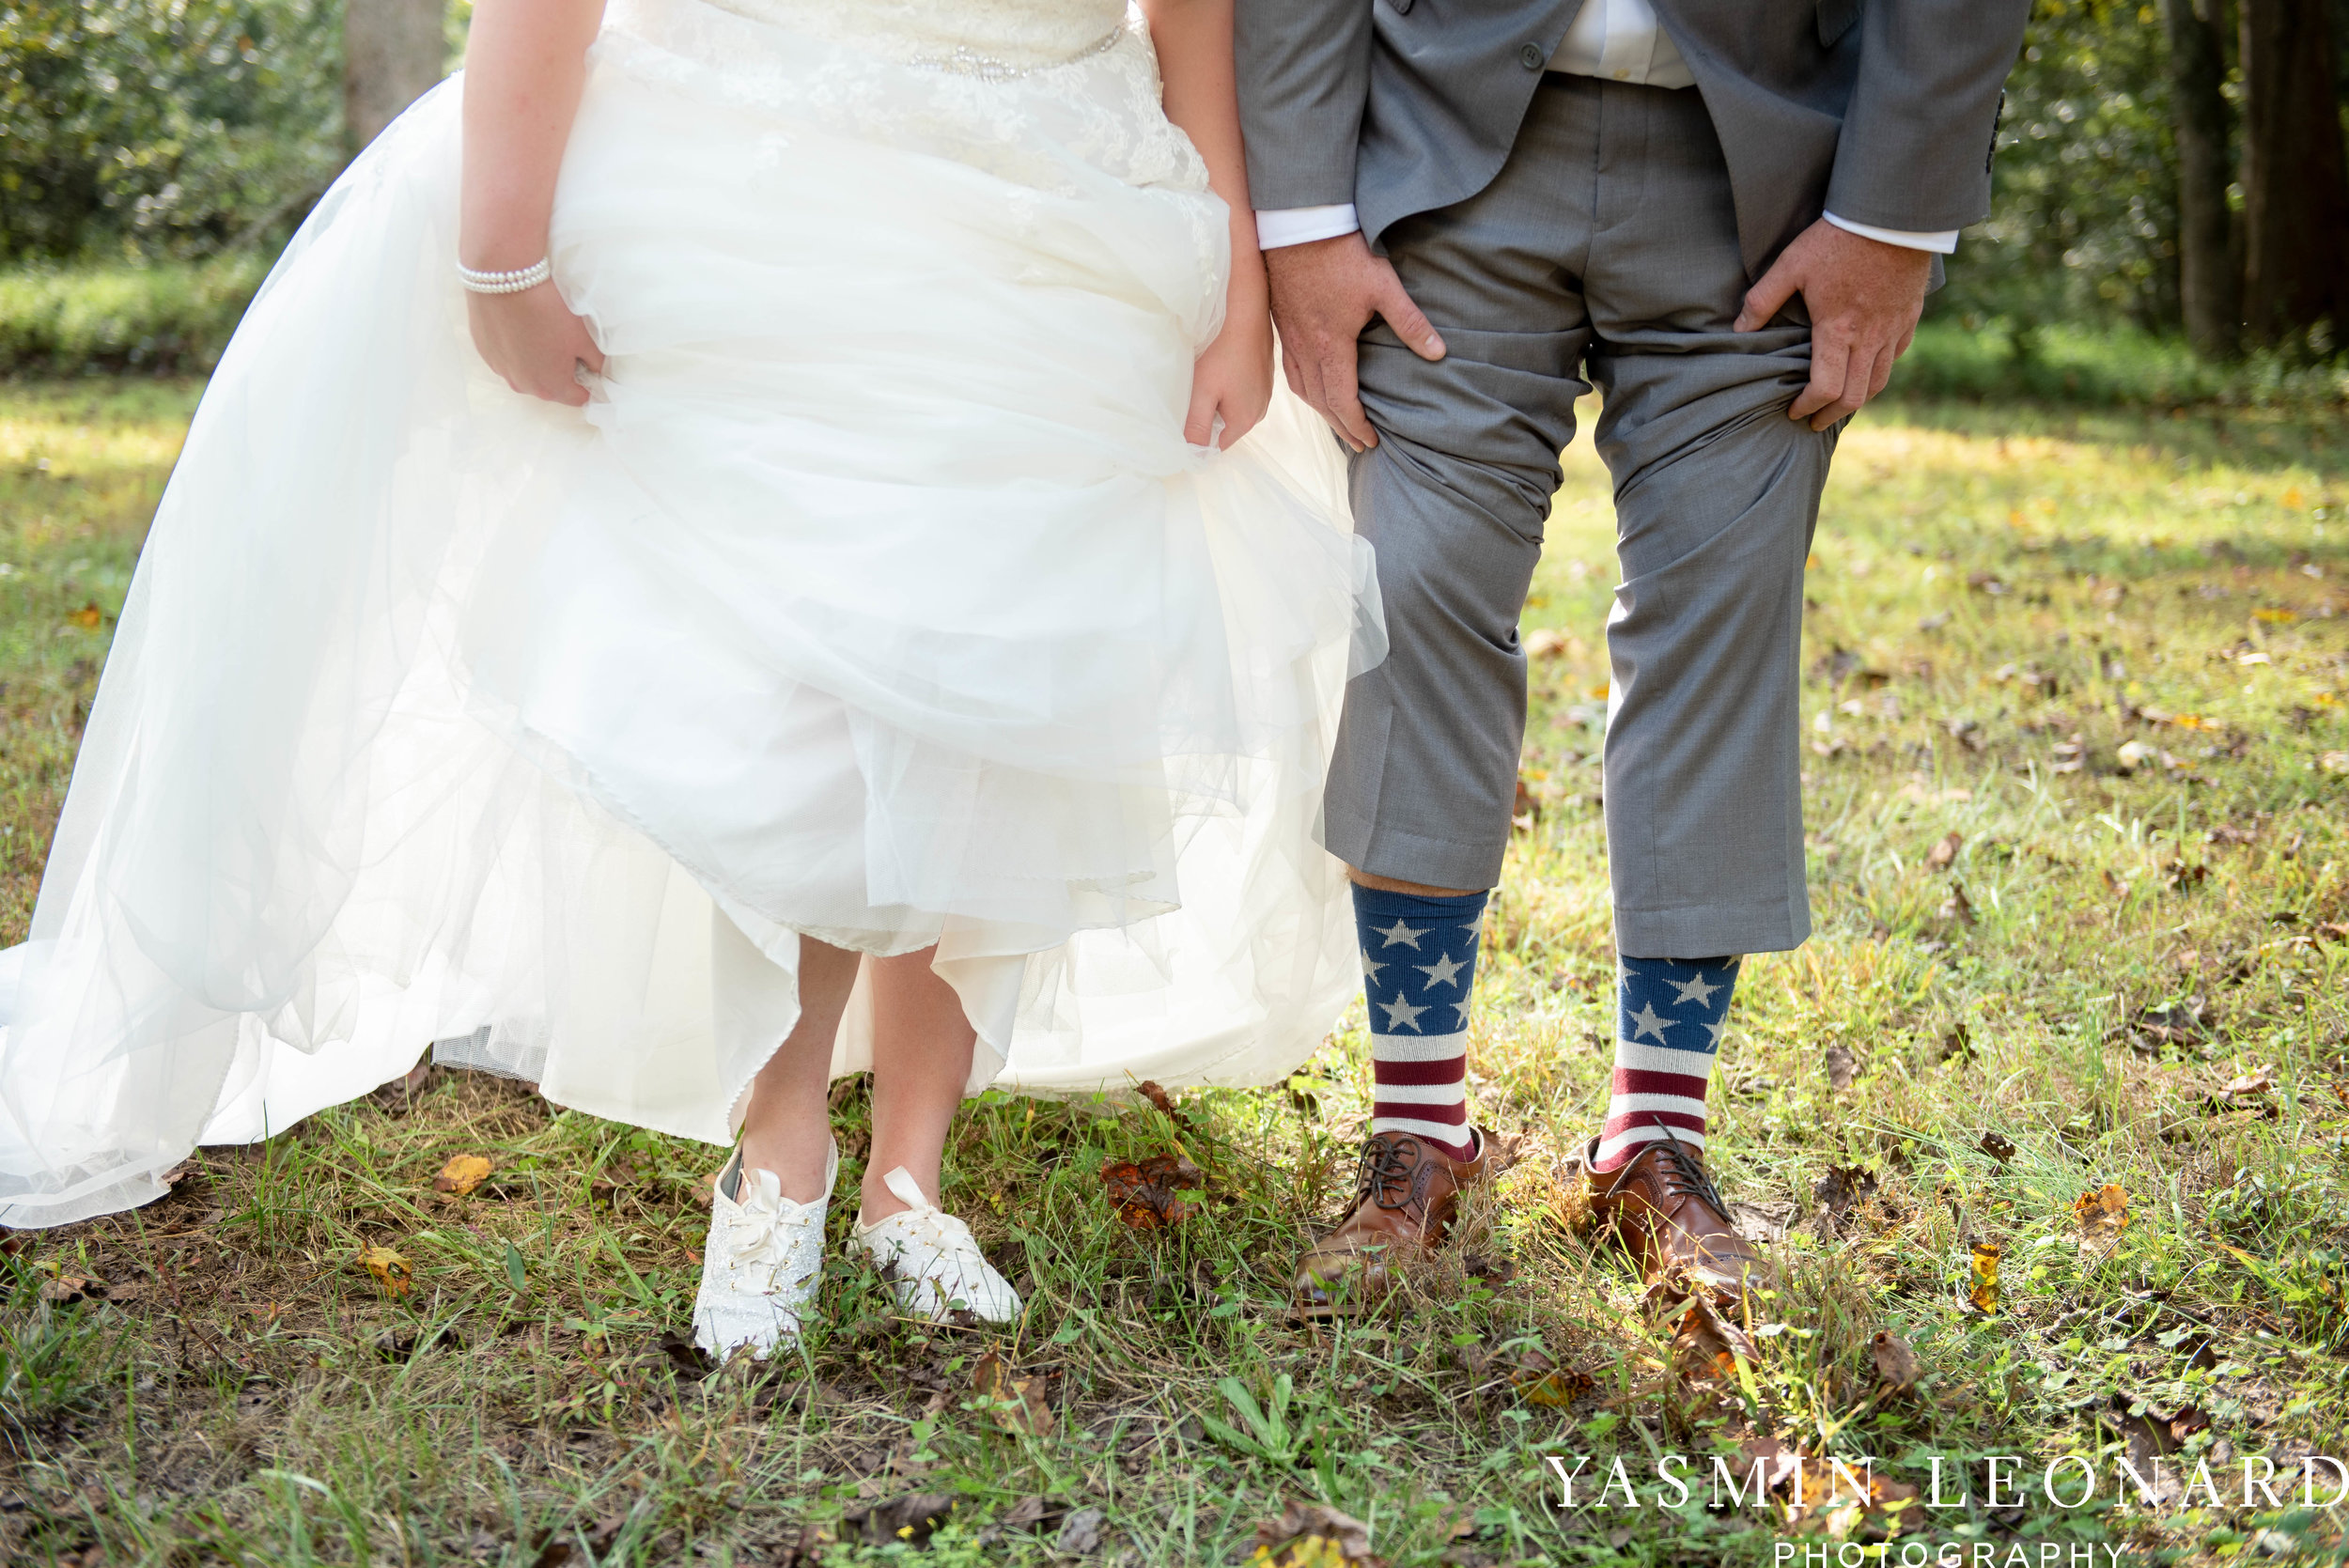 Danner Farms - NC Wedding Venues - NC Barns - Statesville NC - NC Wedding Photographer - High Point Wedding Photographer - Yasmin Leonard Photography-20.jpg